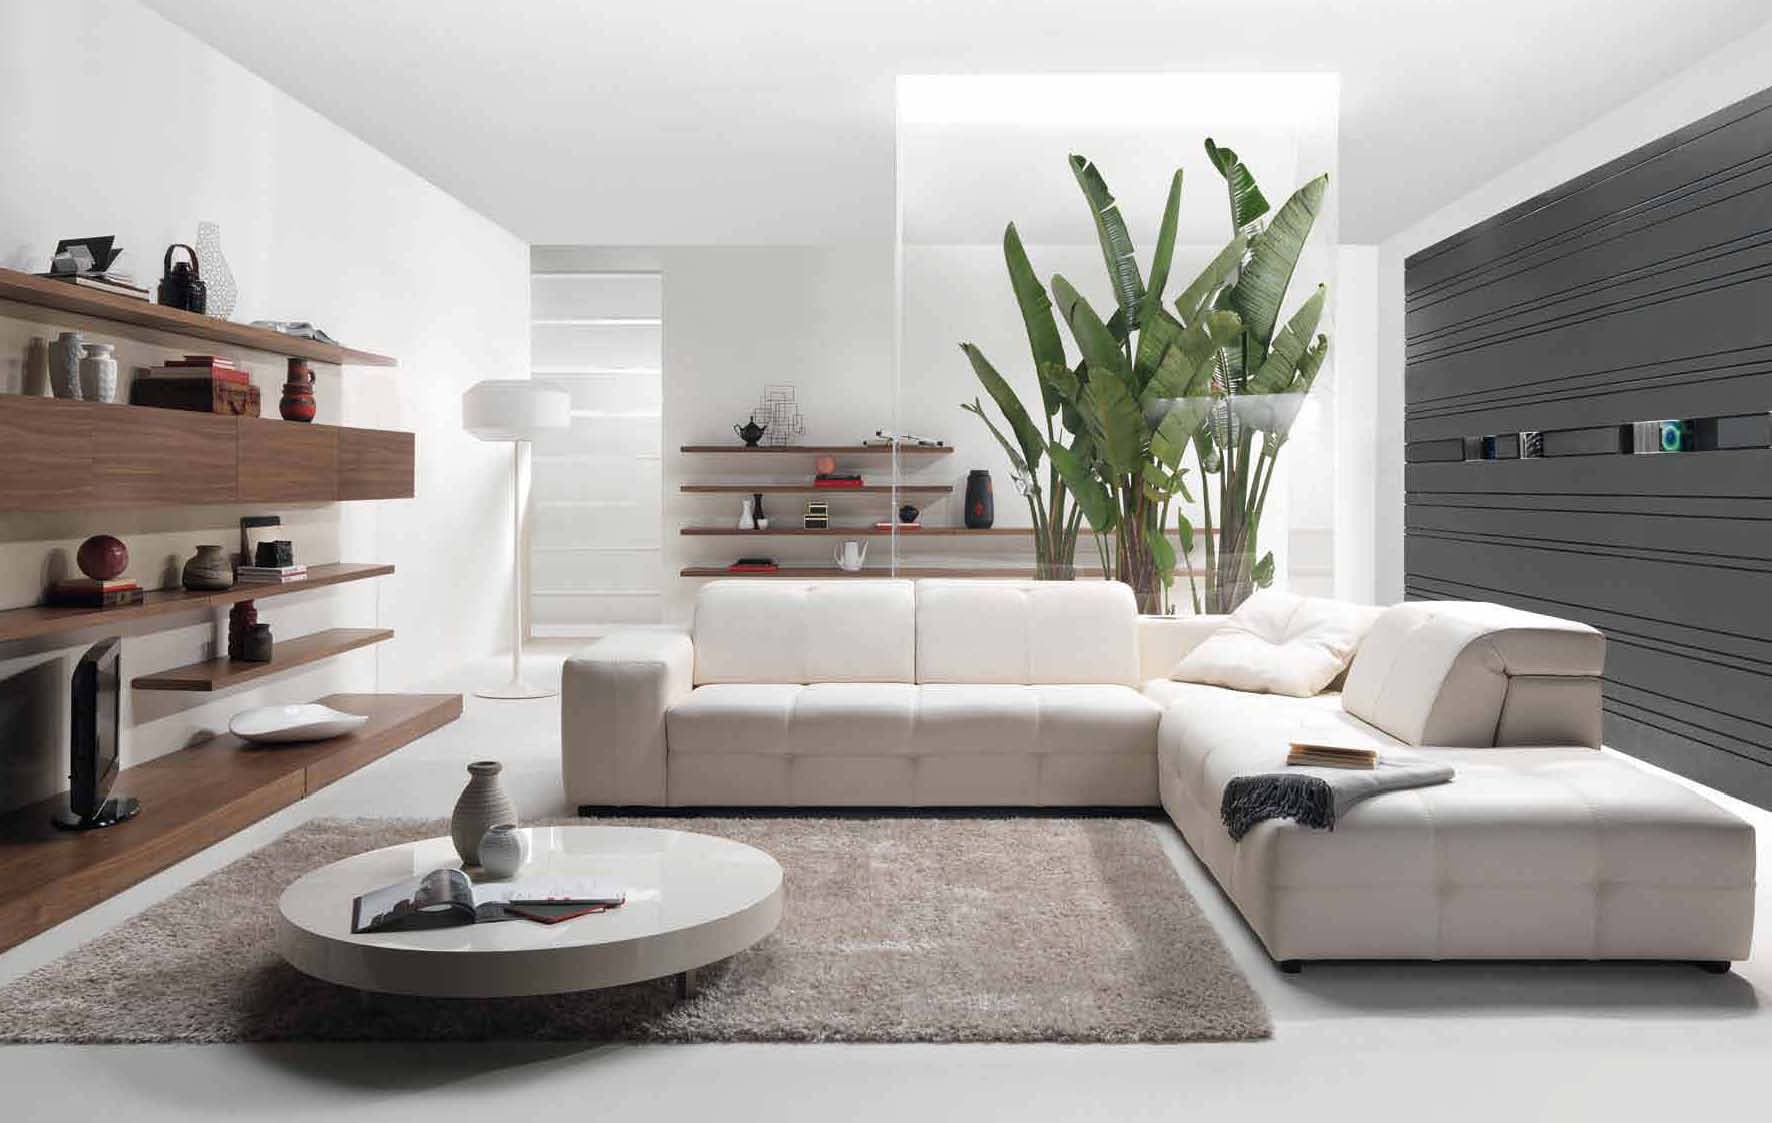 Modern Interior Design Ideas 8654 Hd Wallpapers in Architecture